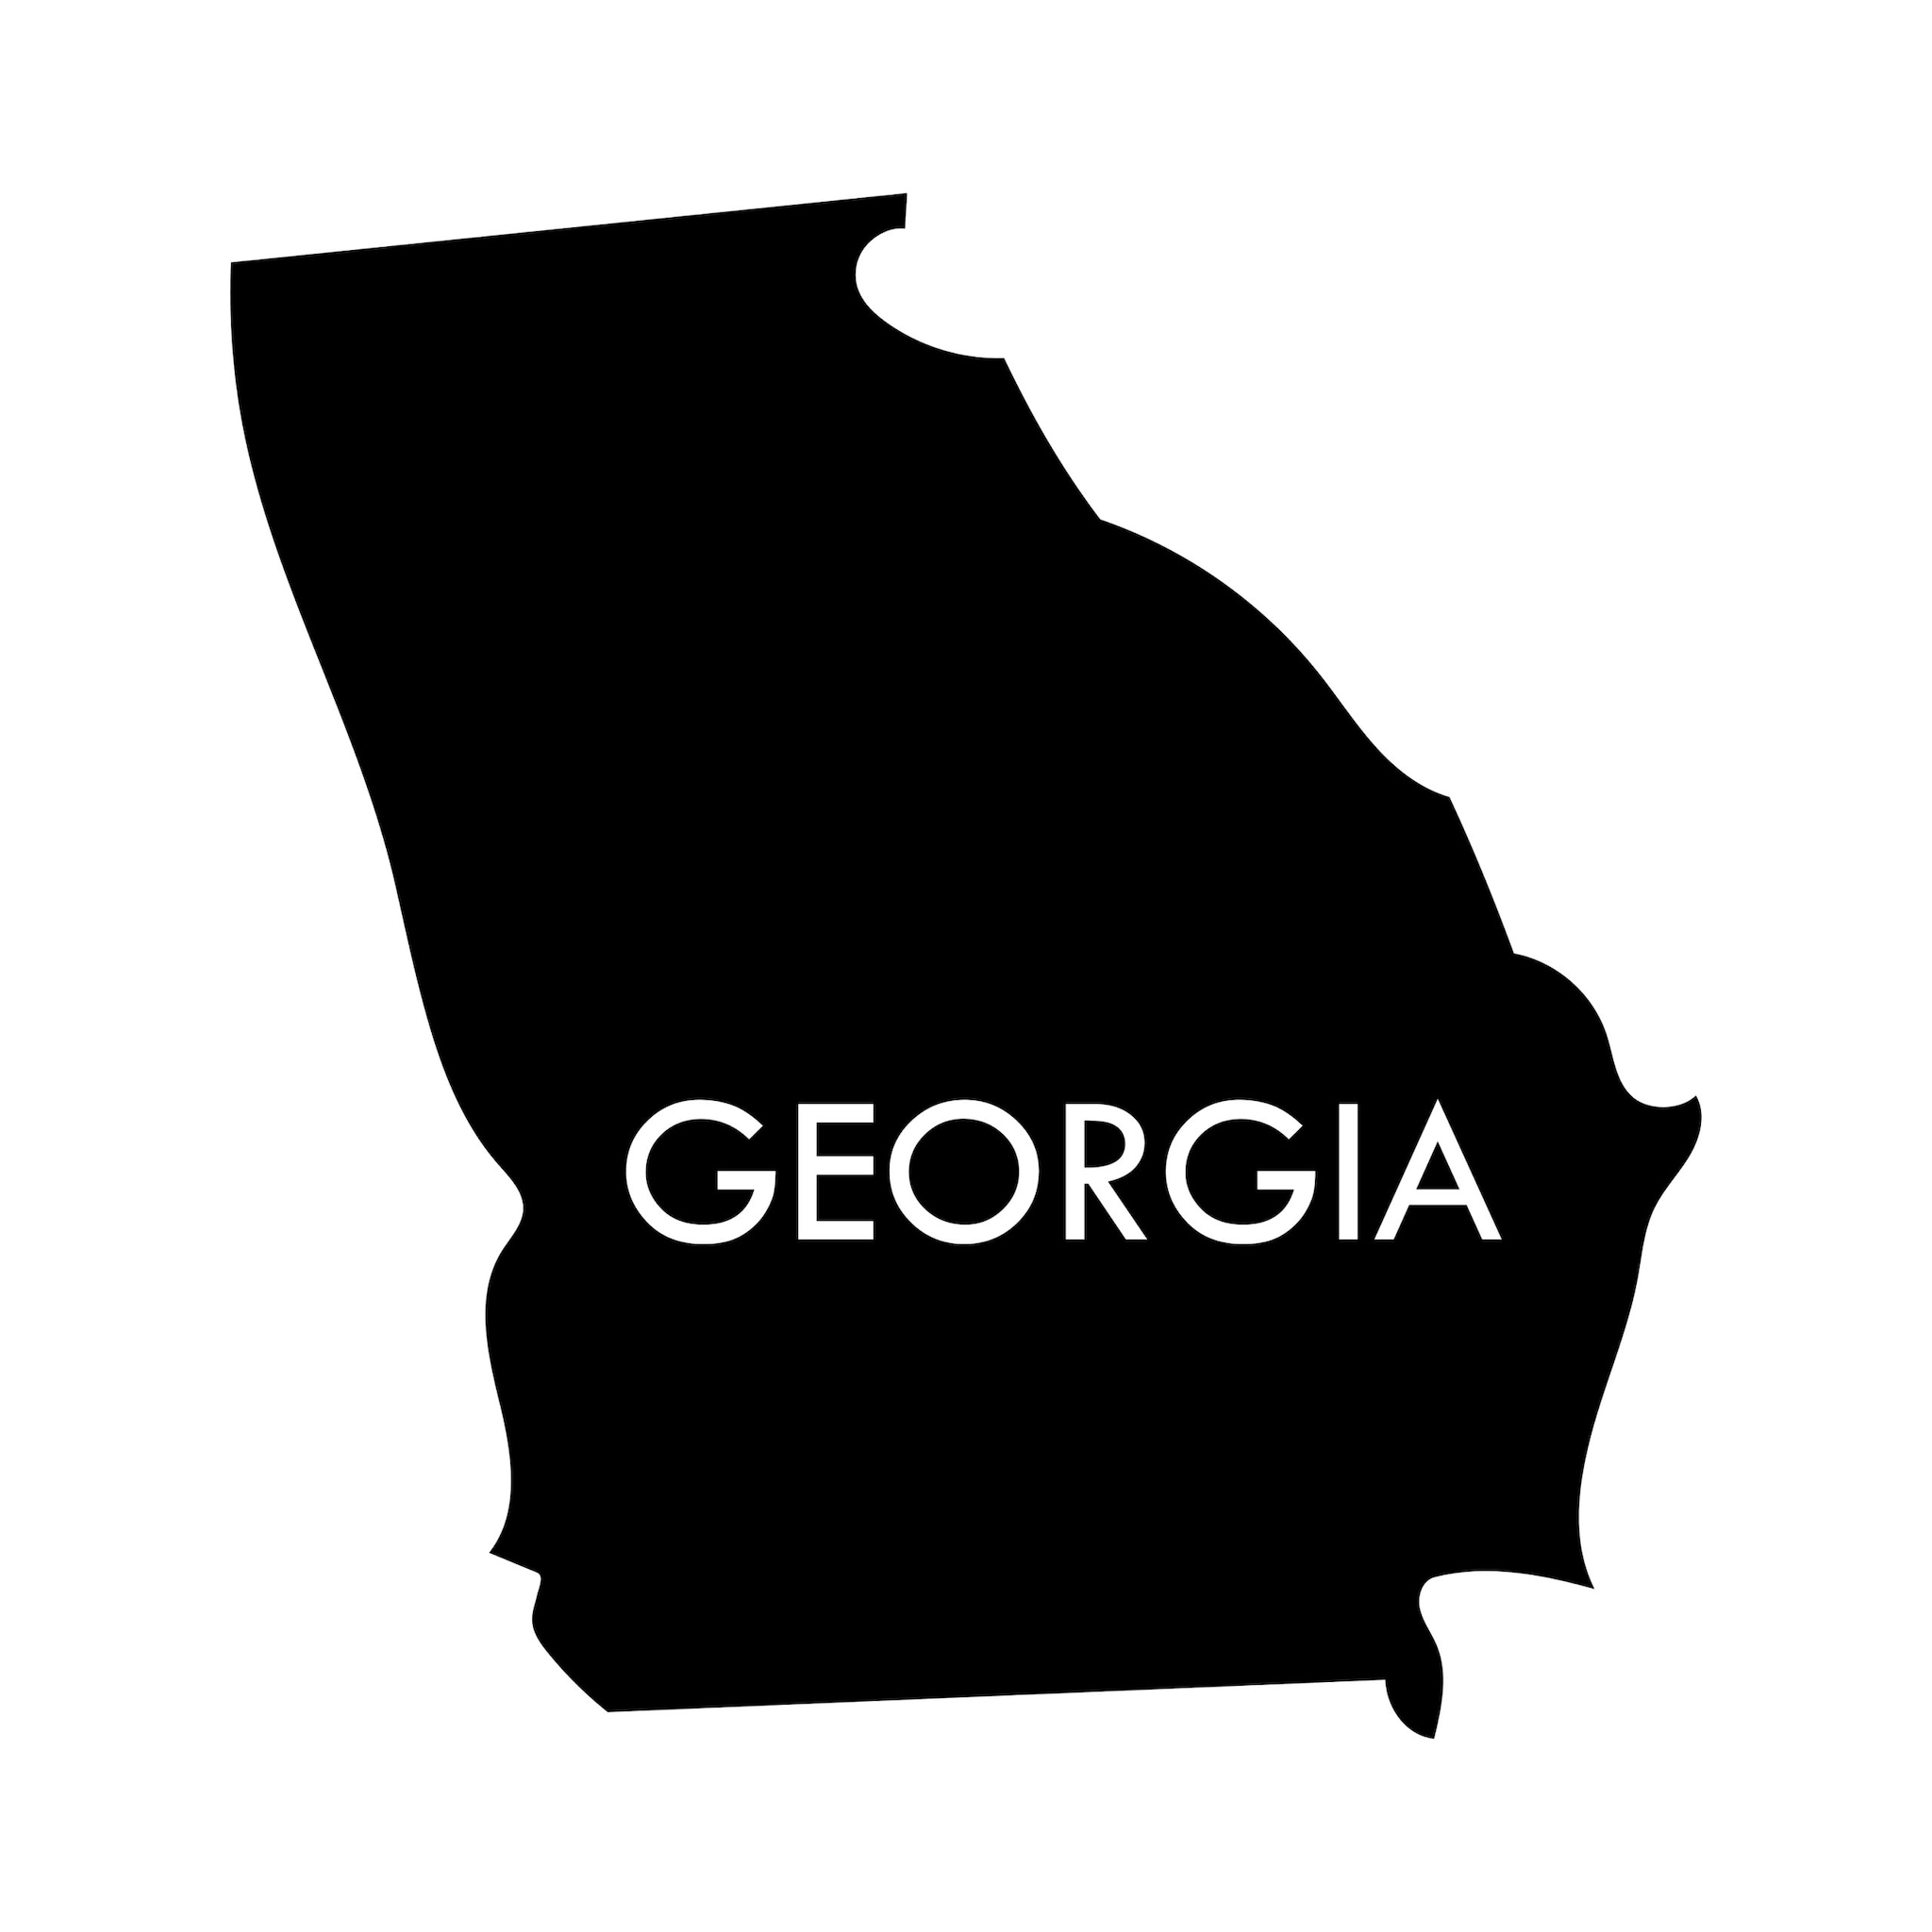 Georgia state shaded black with white text saying Georgia.